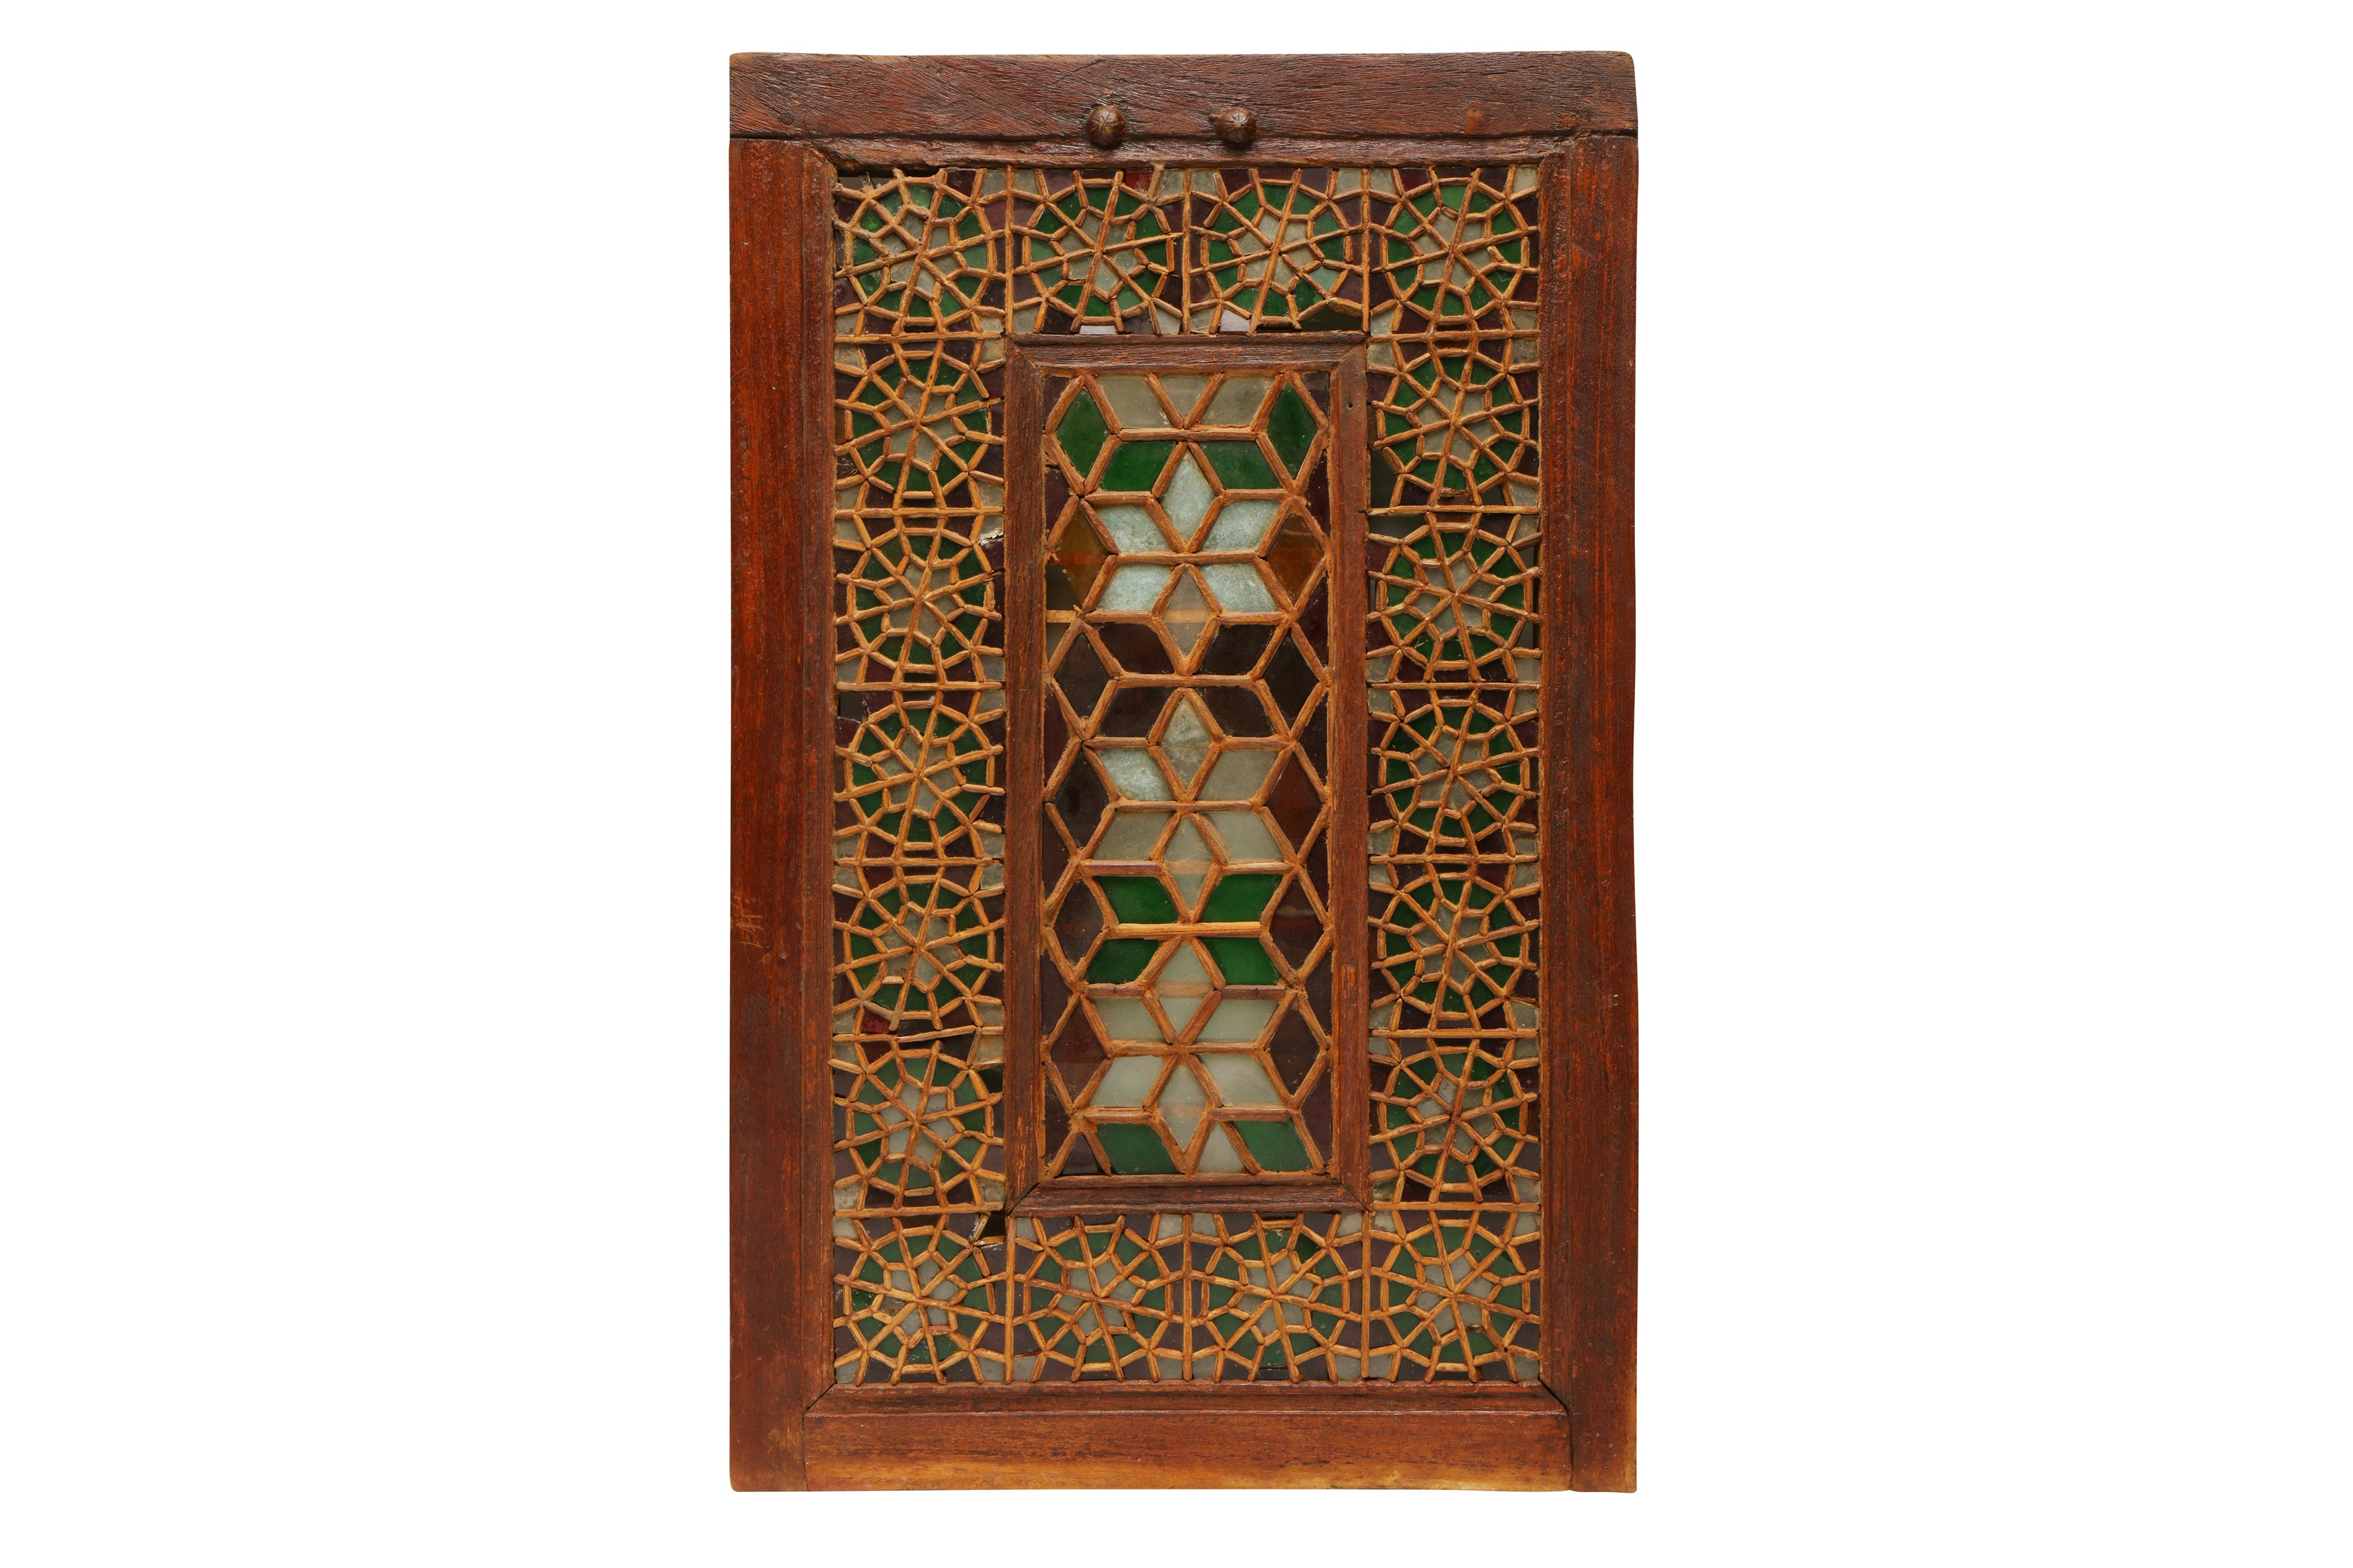 A 19TH CENTURY PERSIAN WINDOW FRAME